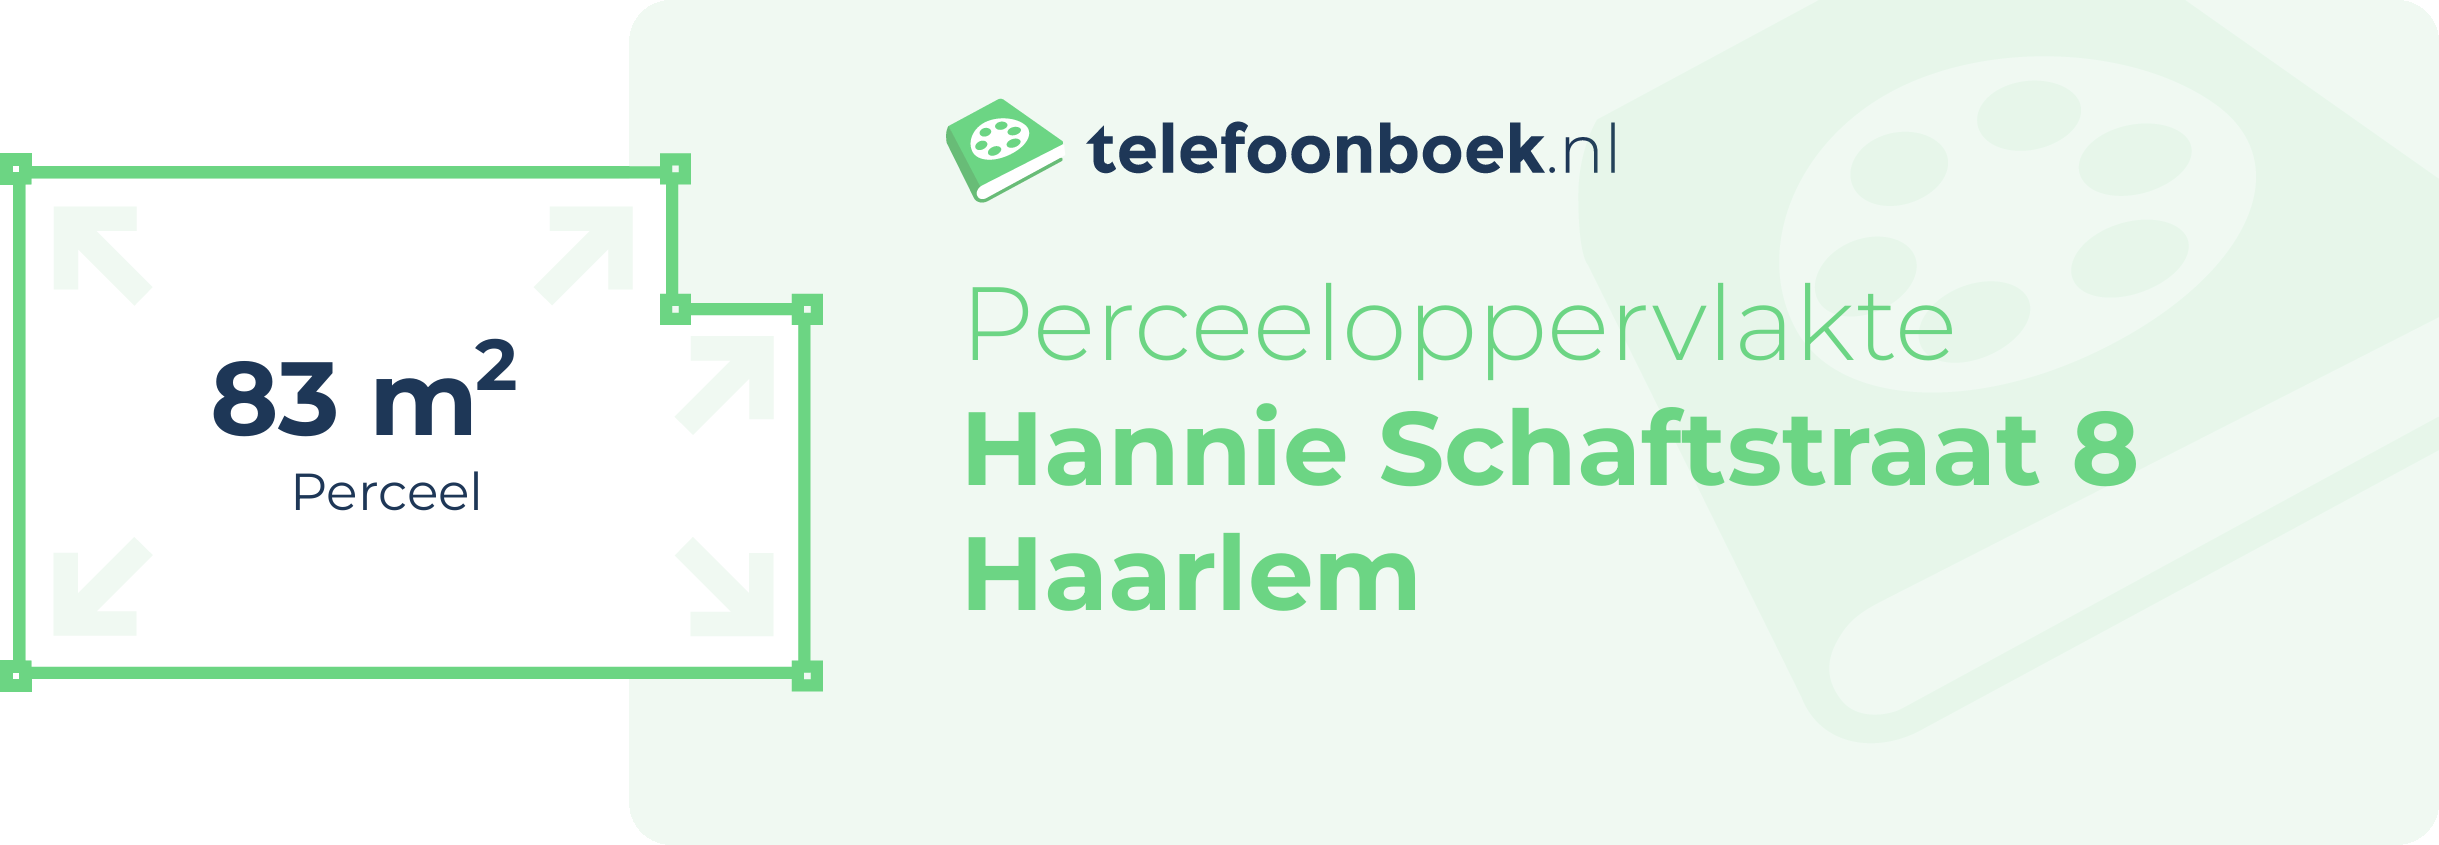 Perceeloppervlakte Hannie Schaftstraat 8 Haarlem